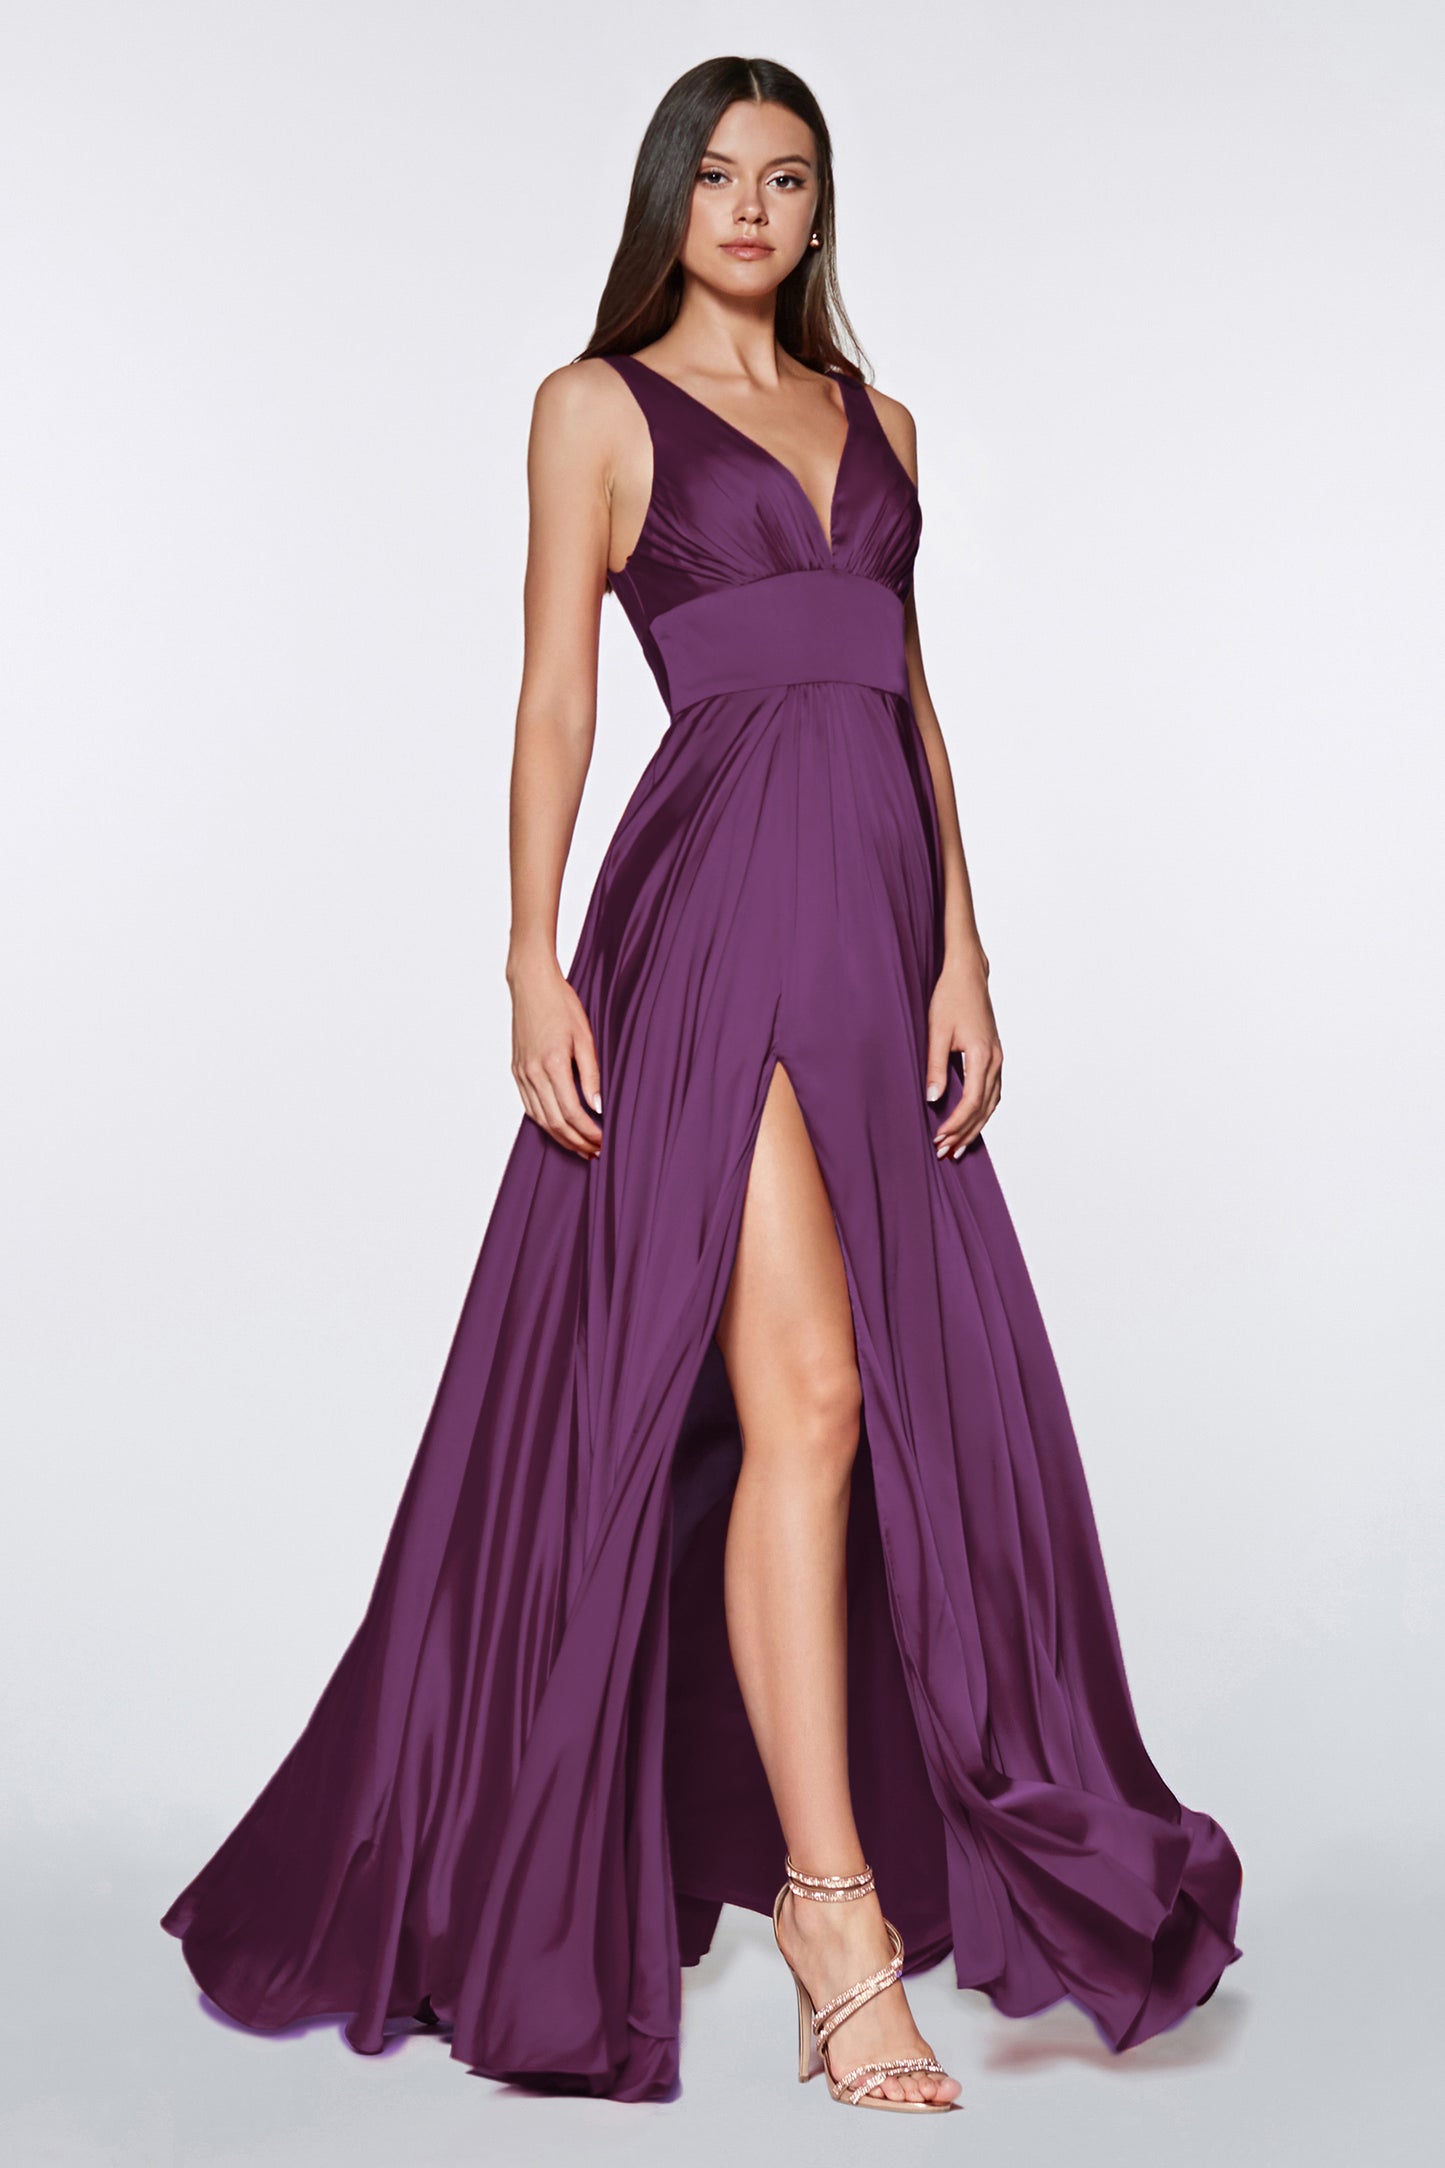 Satin Flowy A-line Dress by Cinderella Divine - 7469C (size 18-24)  - Curves